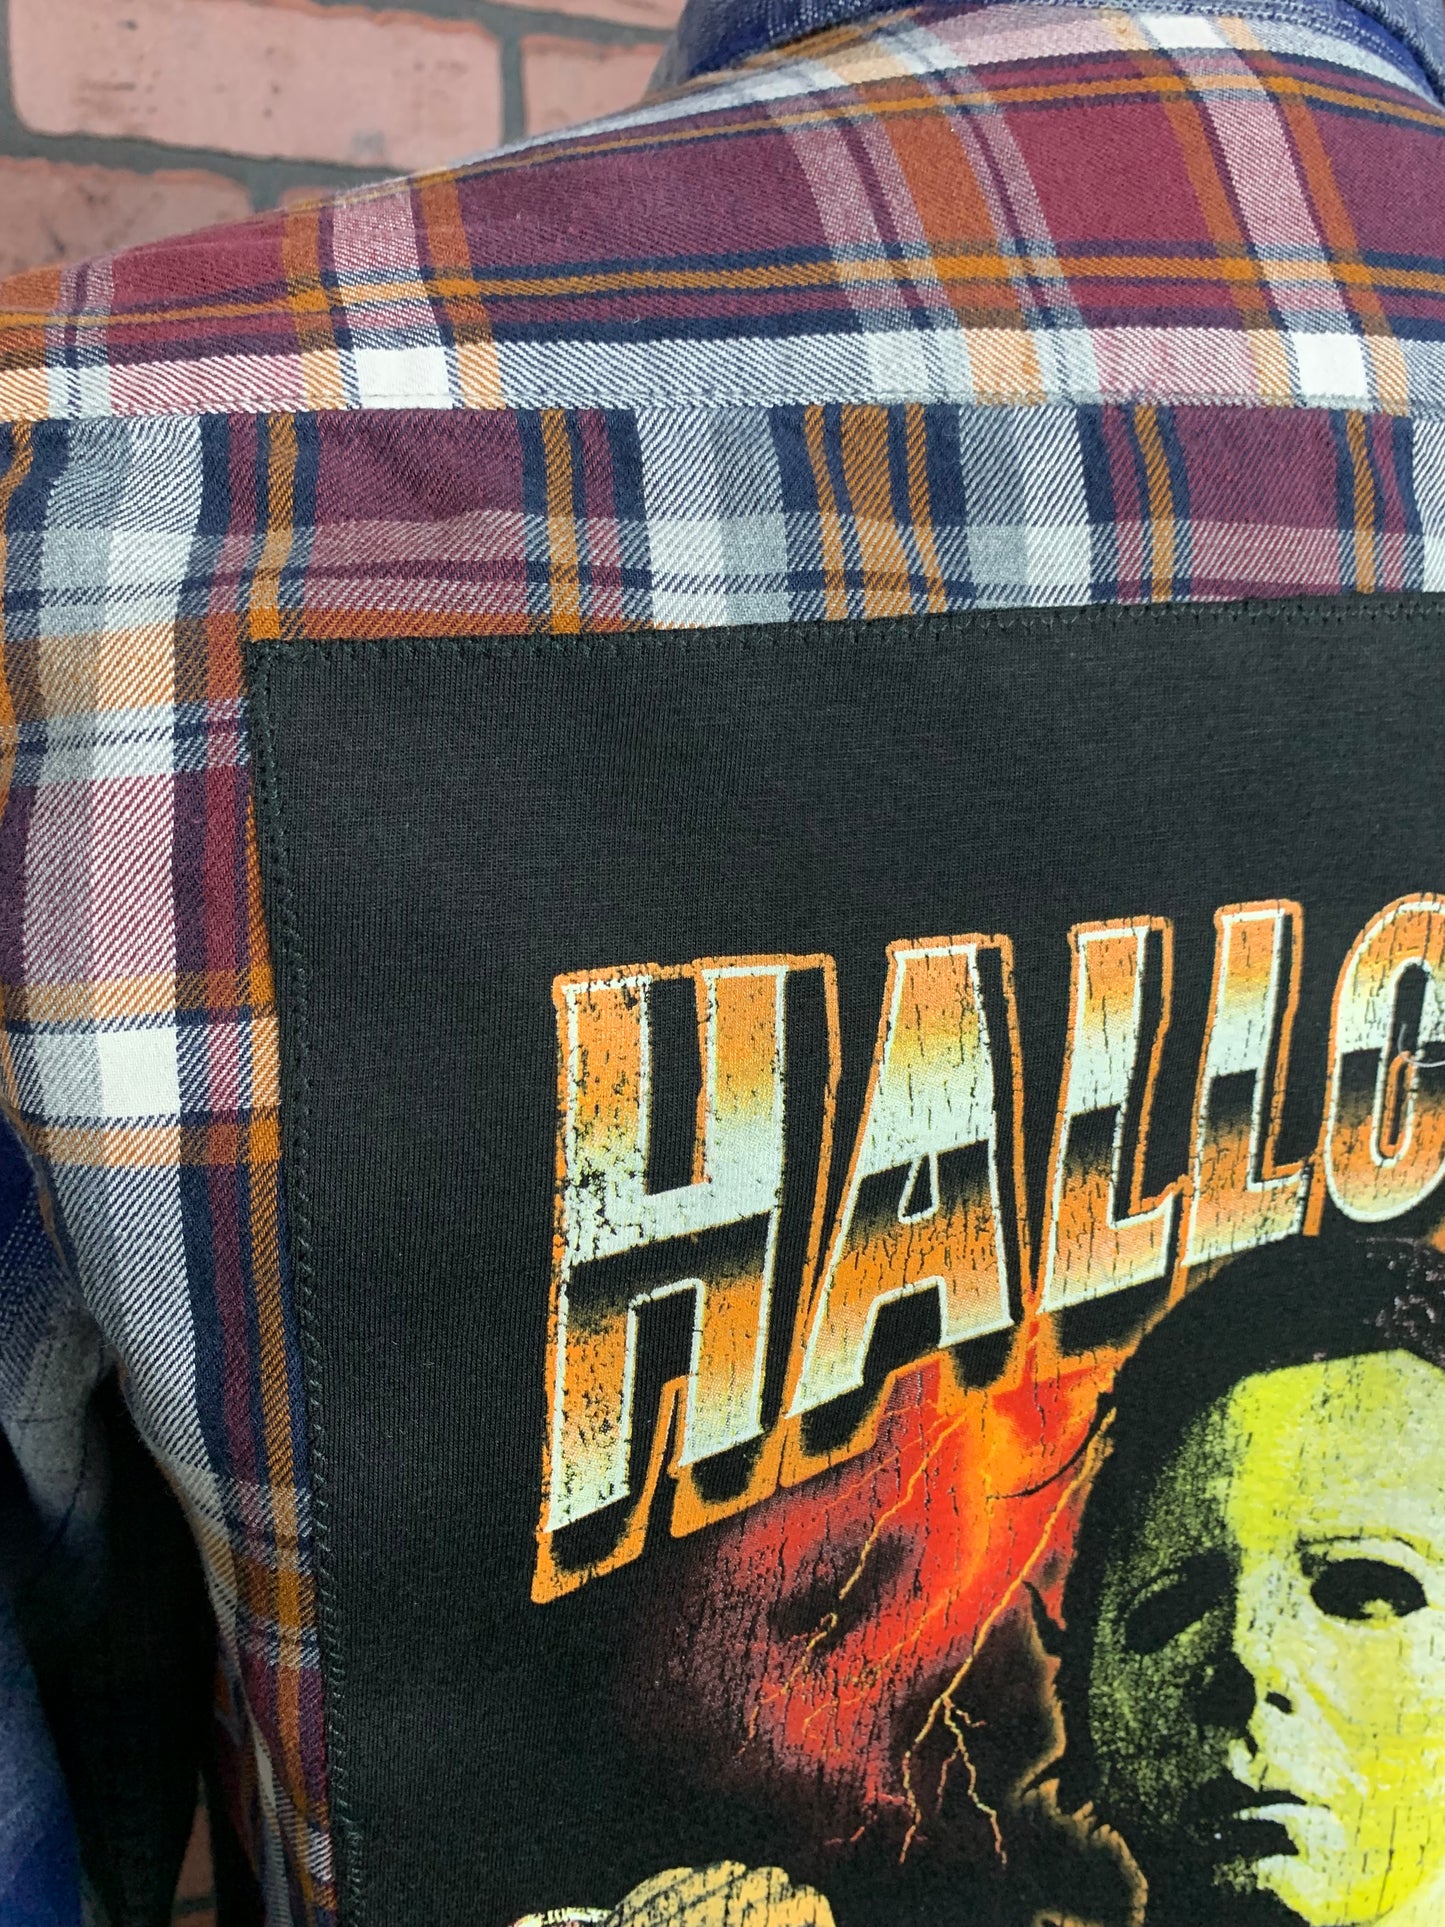 Halloween Flannel Shirt Custom Rework Ladies Large